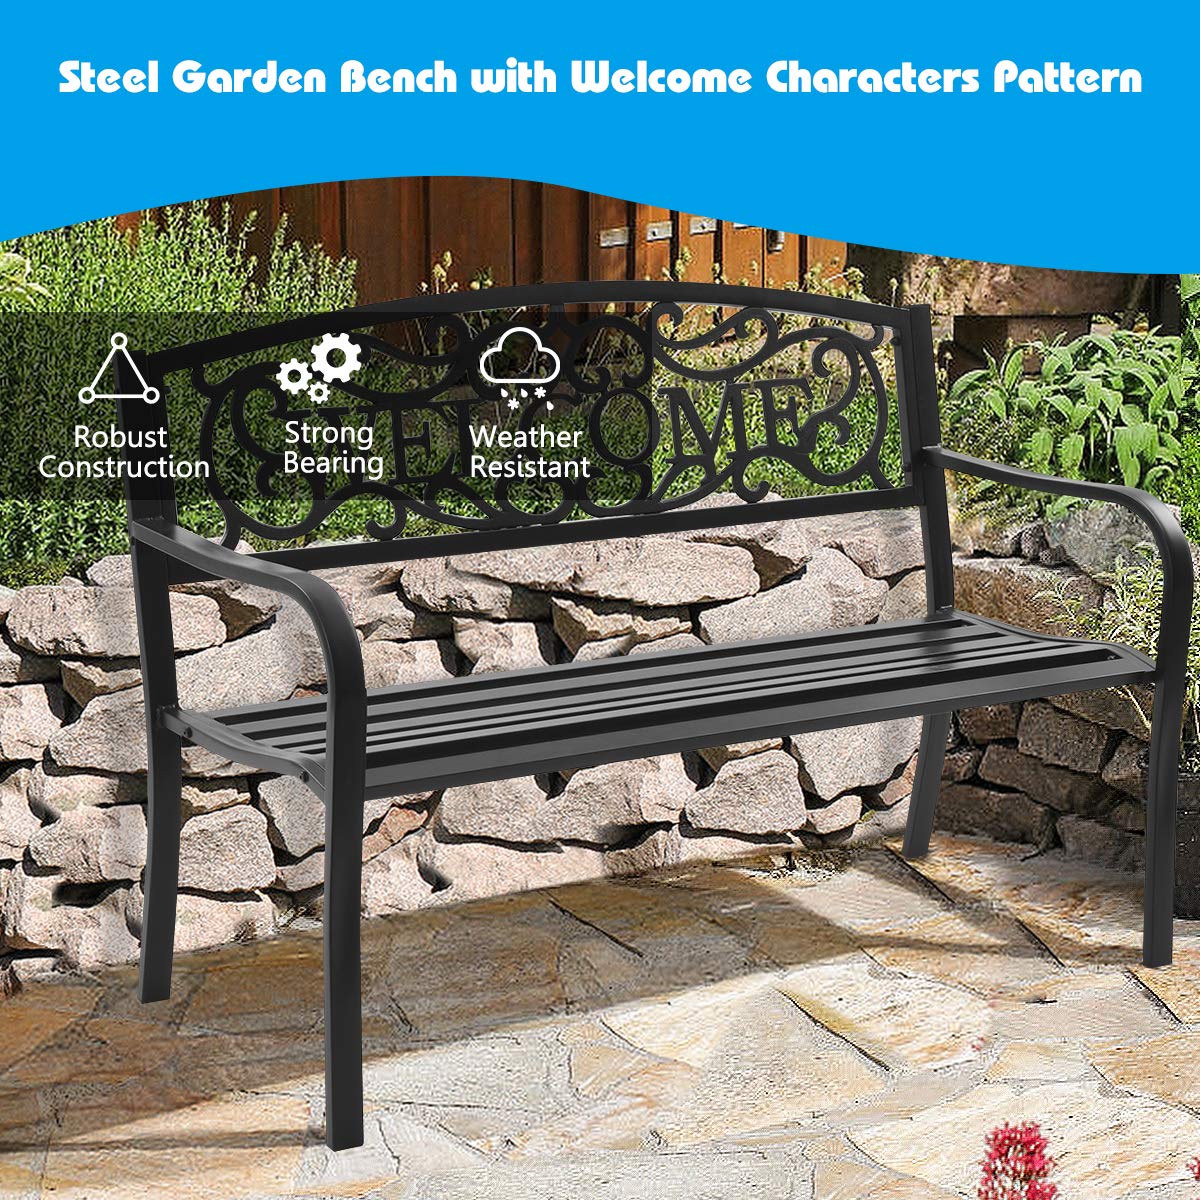 Giantex Garden Bench, Antique Metal Outside Bench w/Warm Welcome Pattern